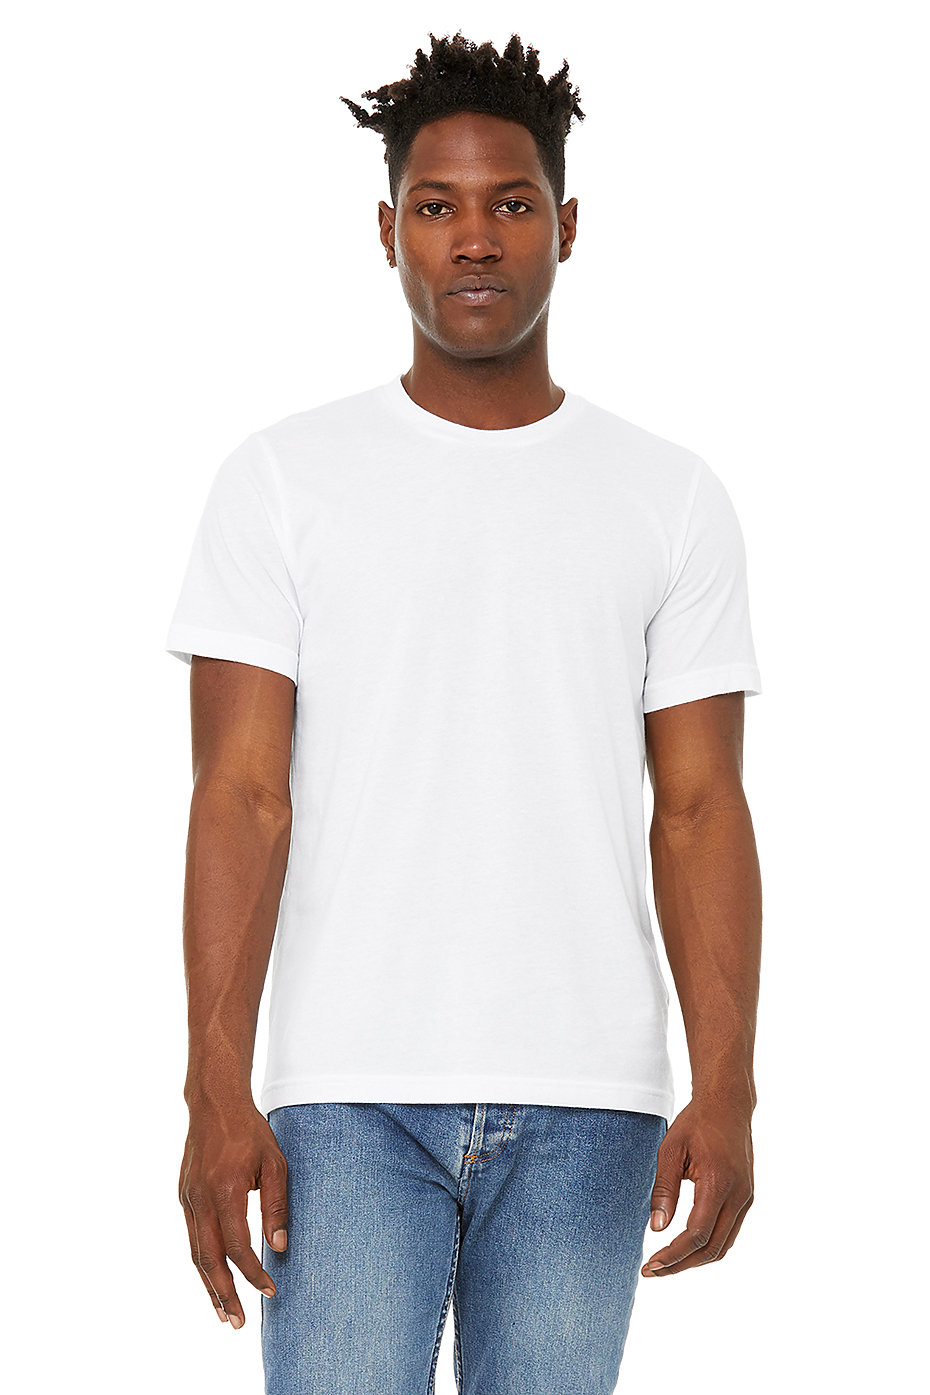 mønt Modstander Vedhæftet fil Unisex Sueded Tee | Wholesale Blank T Shirts | Bulk, Plain T Shirts |  BELLA+CANVAS ®